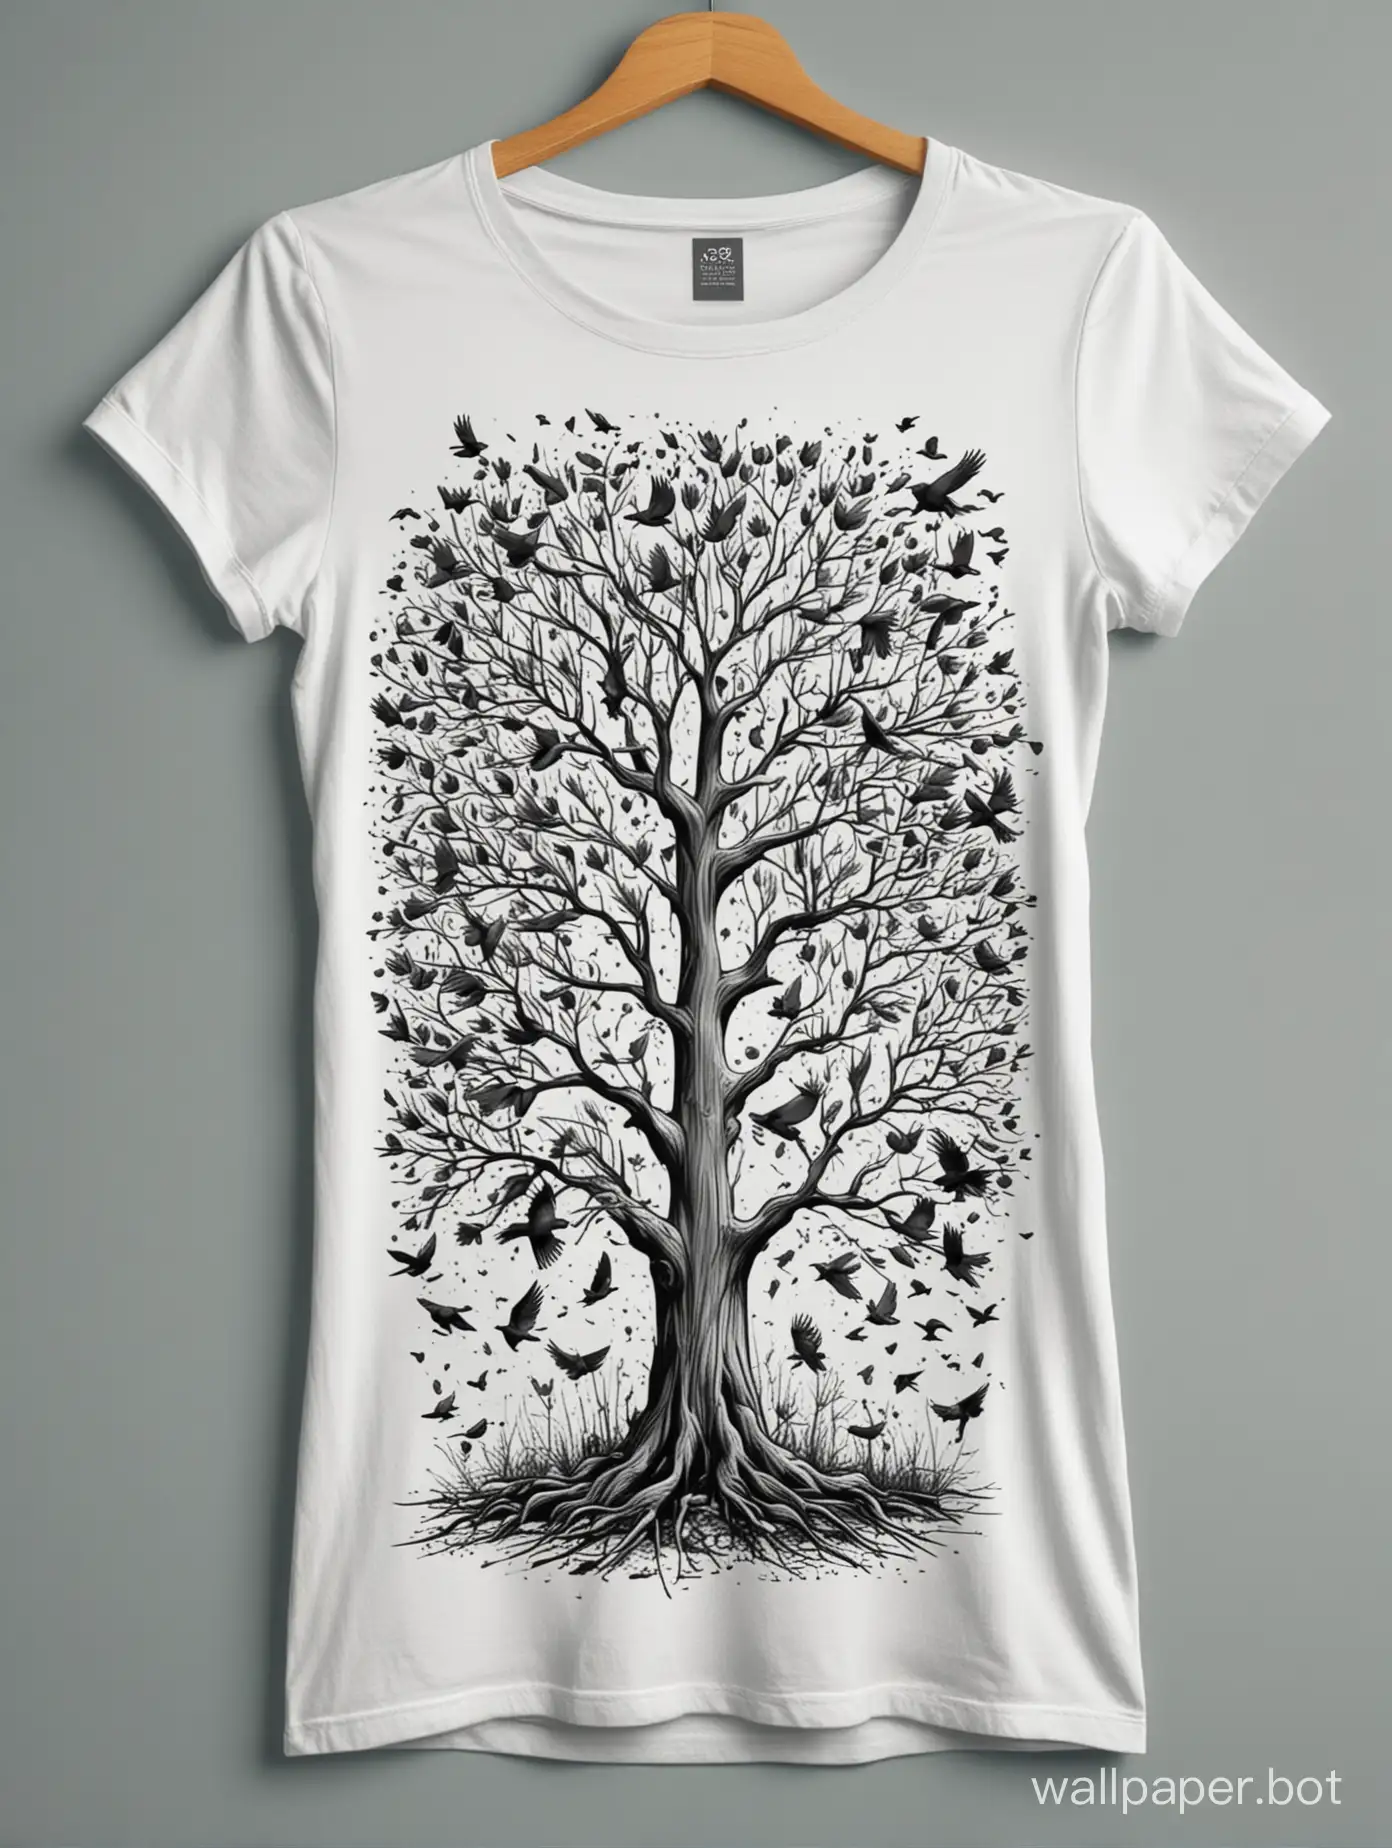 female t shirt mockup template, long shirt, street art style, monochrome tree full of birds illustration on shirt, duocolor  lineart, explosive colors